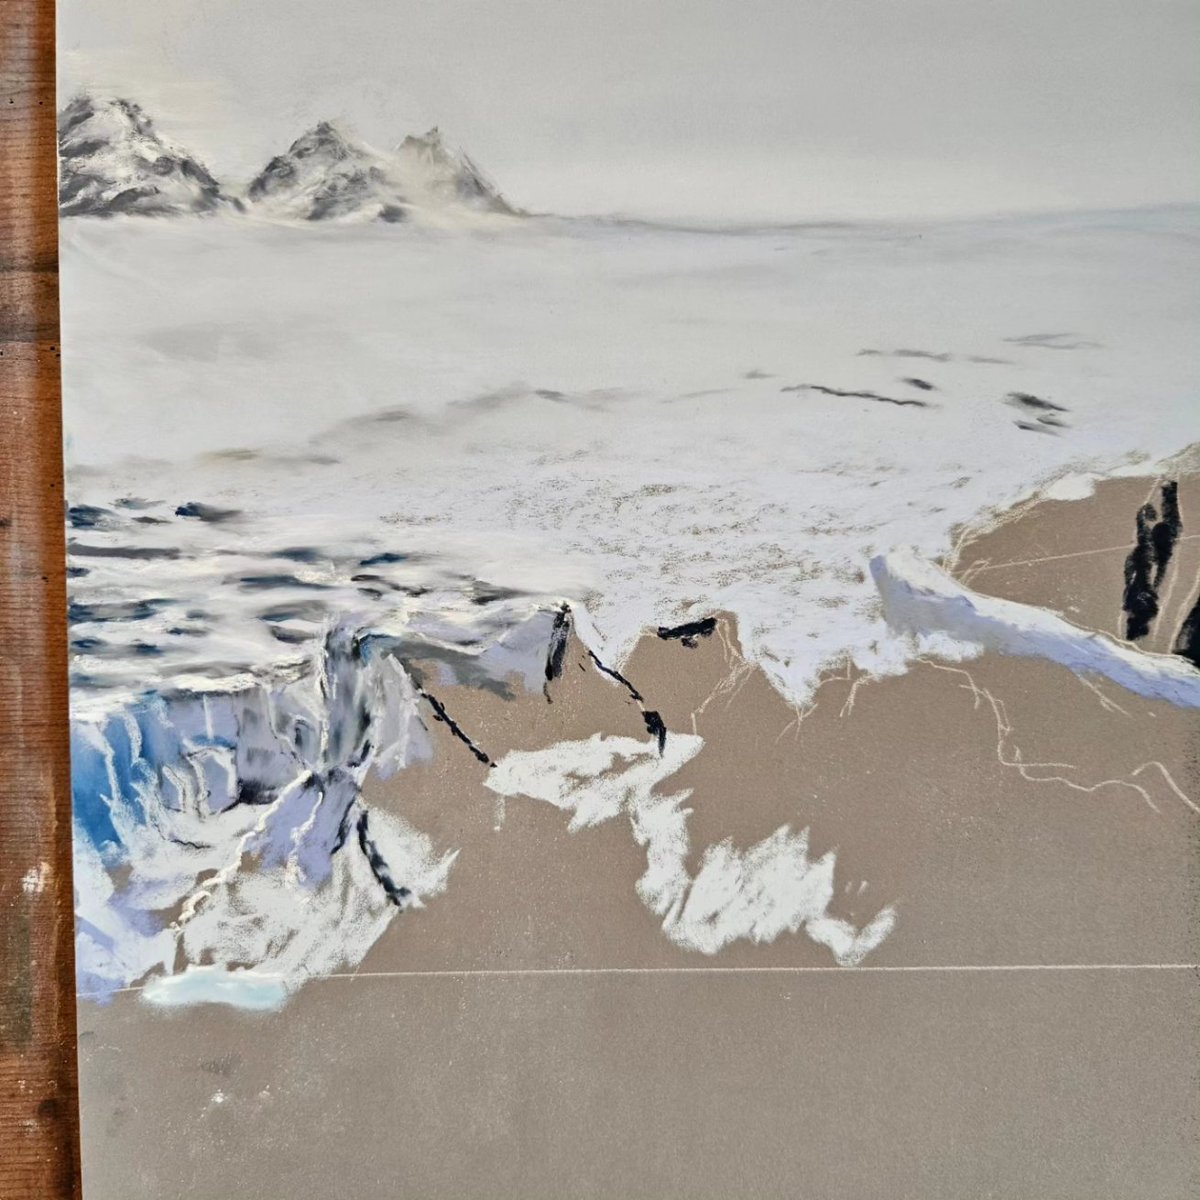 #FINISHED after a literal month of Sundays
#art #artist #landscapeart #landscapeartist #pastelart #pastelartist #irishart #irishartist #artistsontwitter #stages #irishartistsontwitter #irishart #womenwhopaint #arcticart #arctic #Svalbard #spitzbergen #glacier #lilliehöökbreen